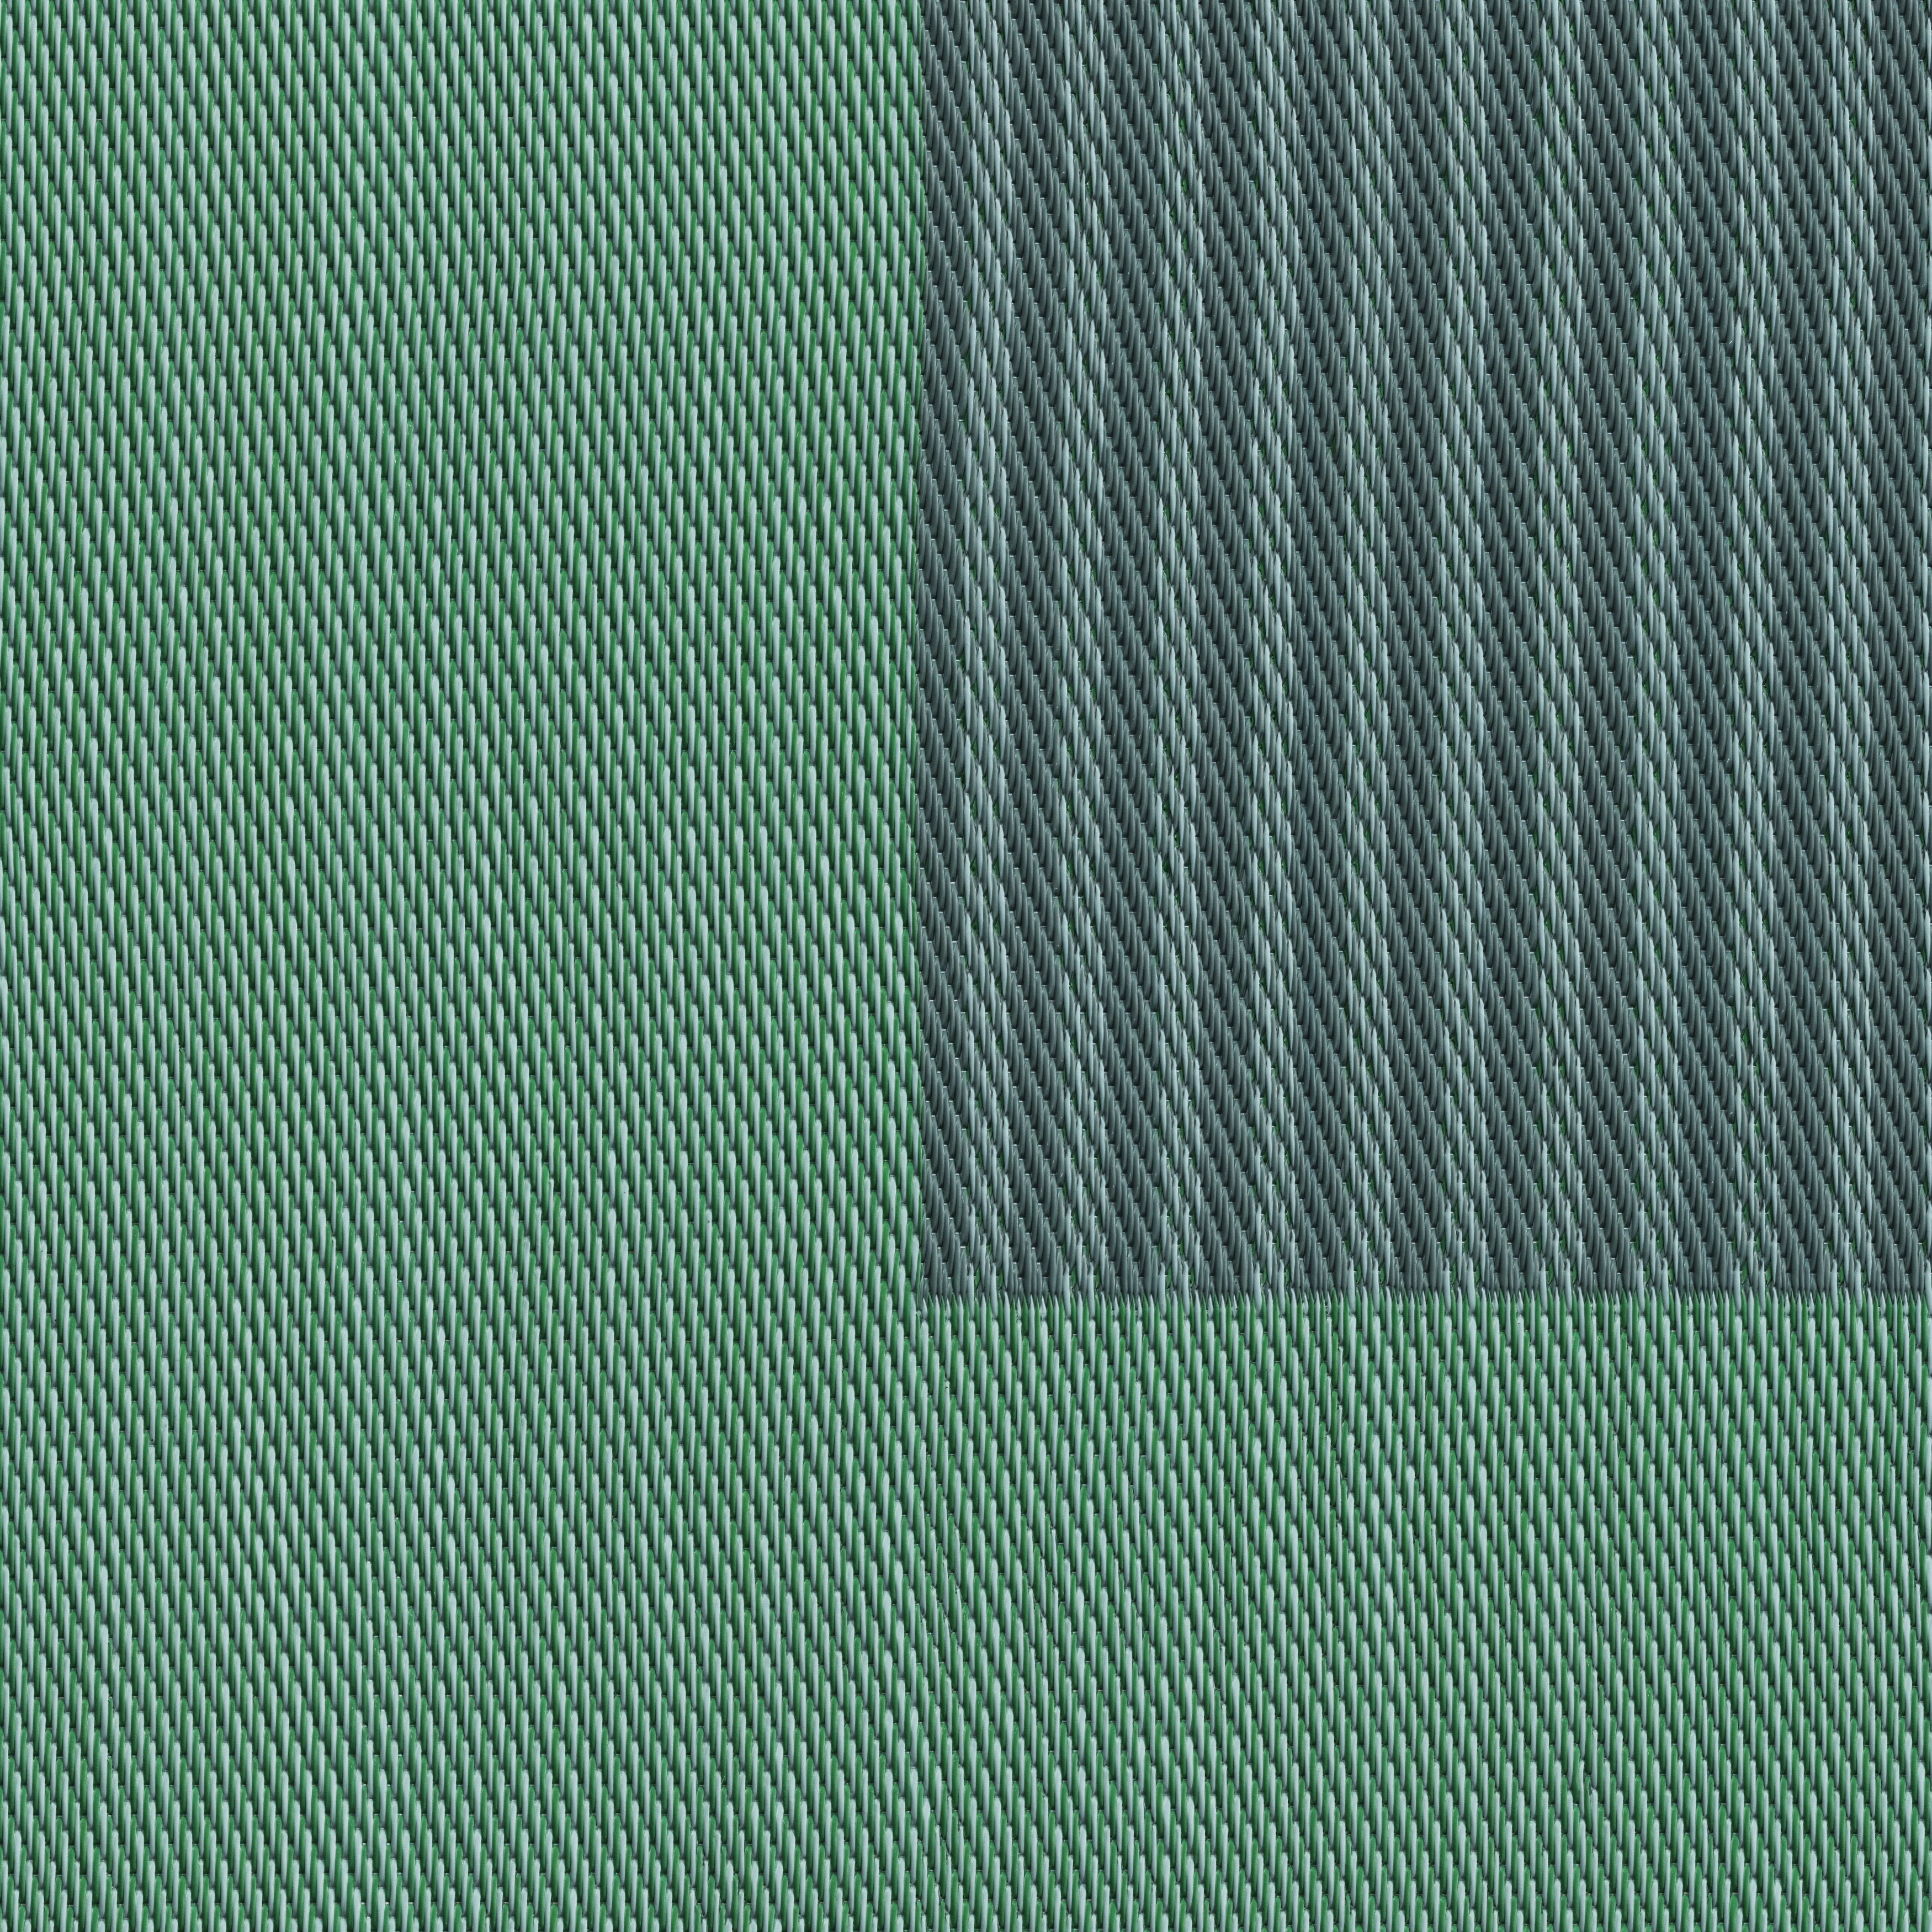 GoodHome Malaita Green Geometric Woven effect Reversible Medium Outdoor Rug 180cmx120cm